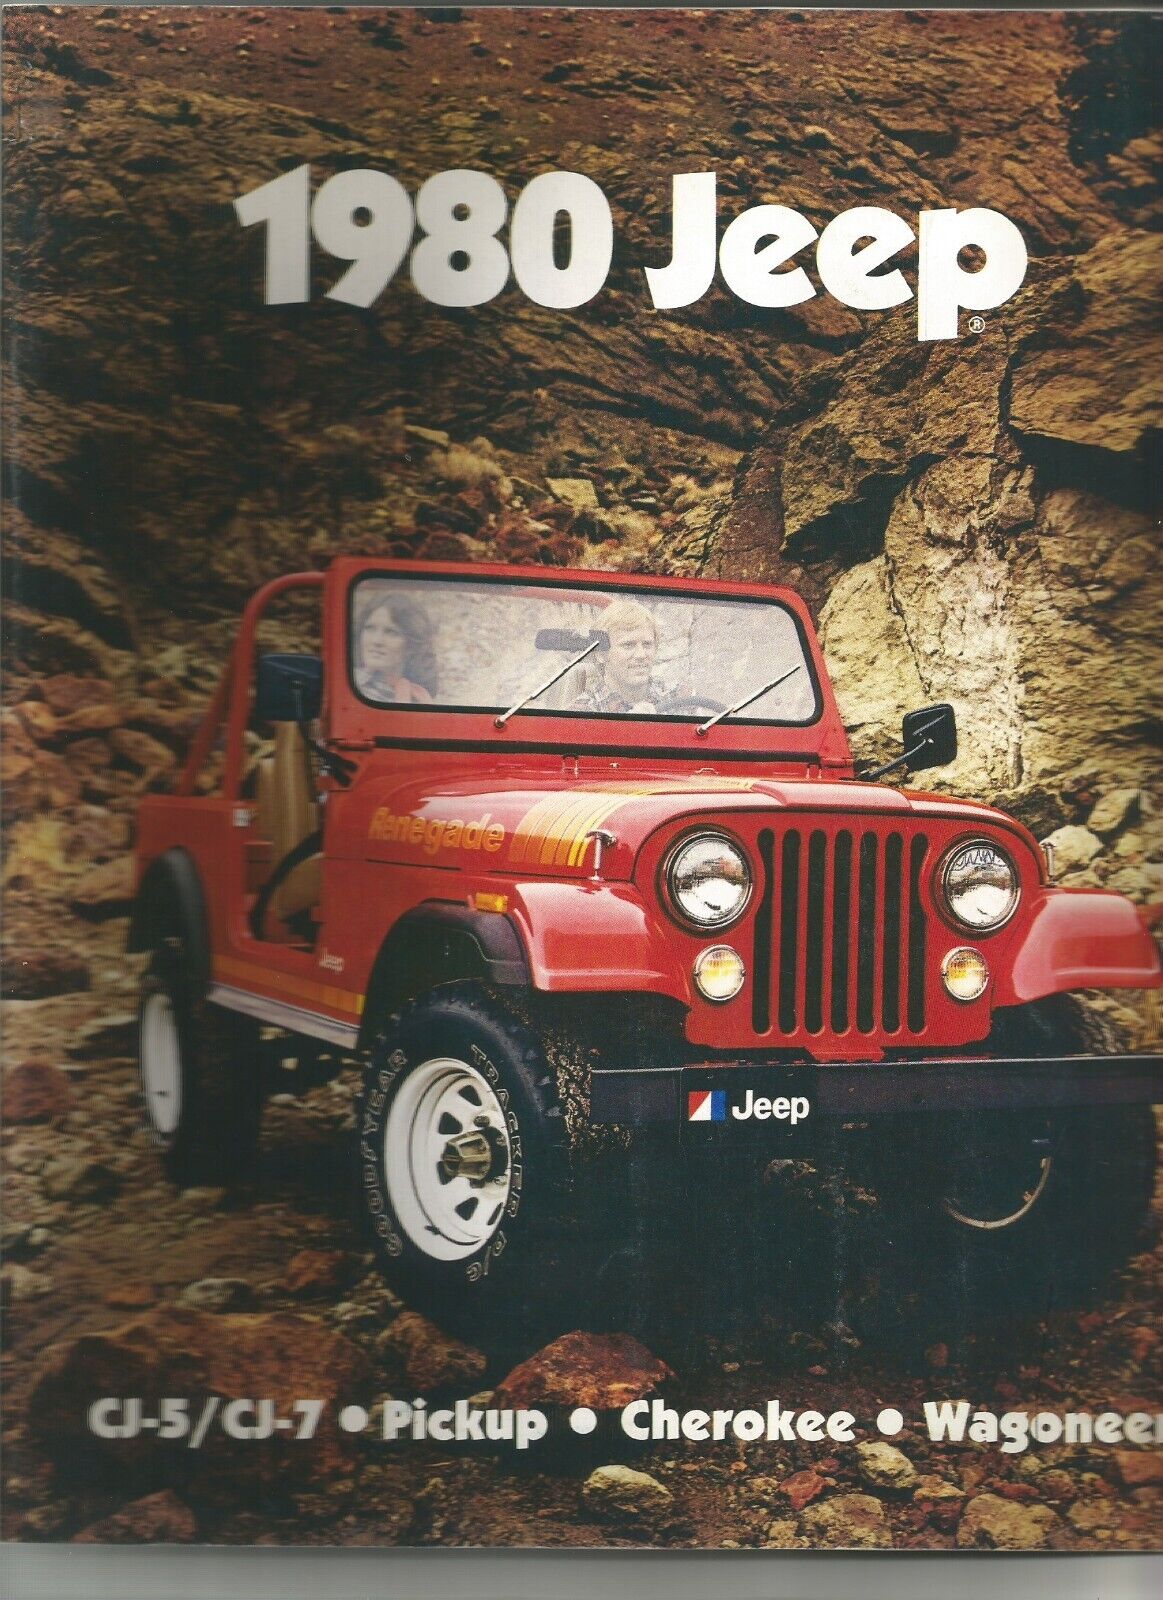 Premium 1980 Jeep Sales Brochure with Wagoneer, Cherokee, CJ-5 7, Honcho Pickup